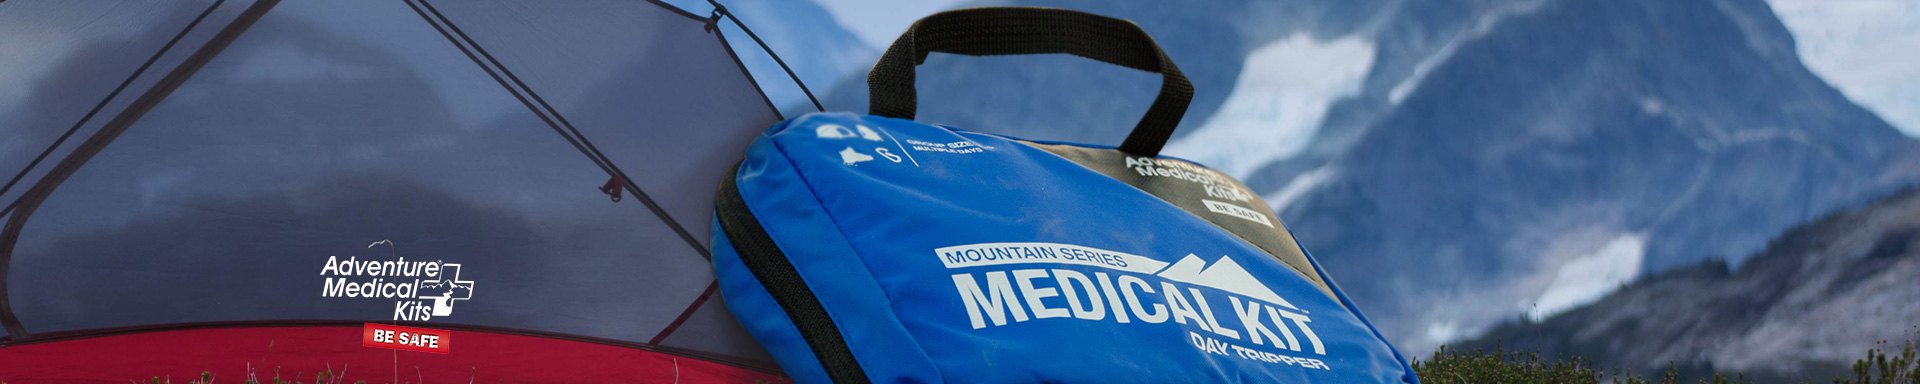 Adventure Medical Kits Emergency & Survival